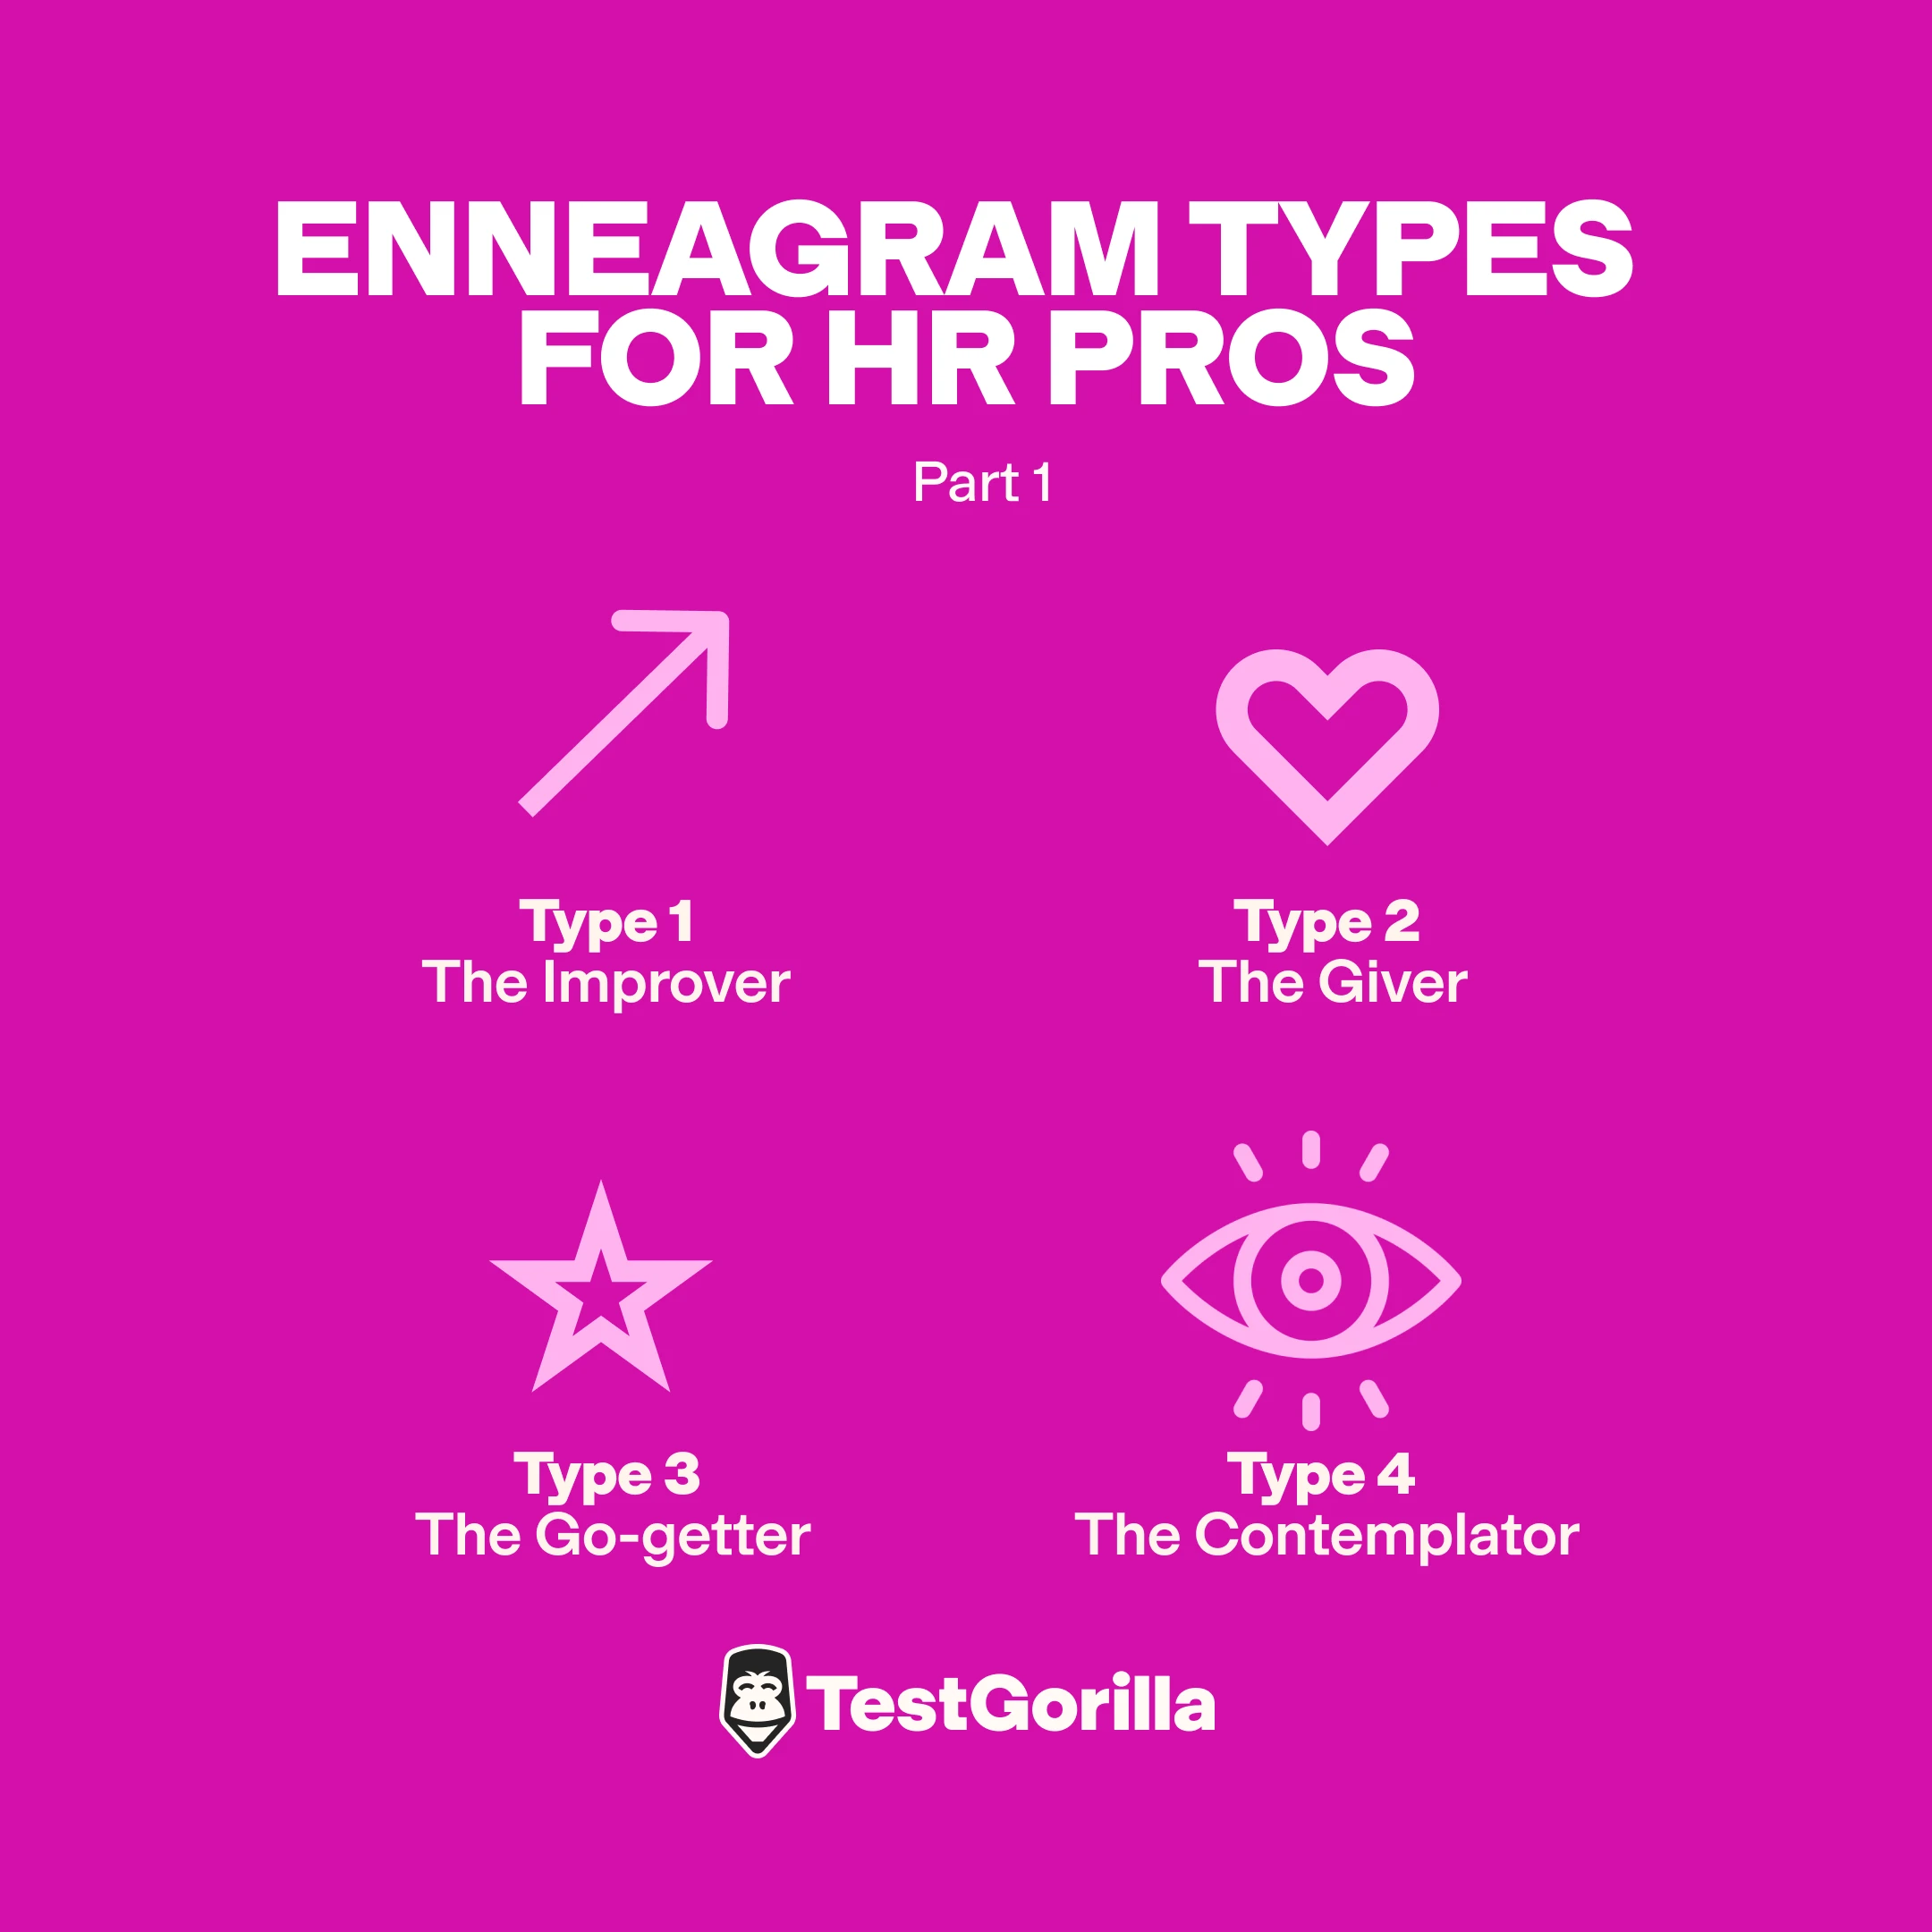 Enneagram types for HR pros